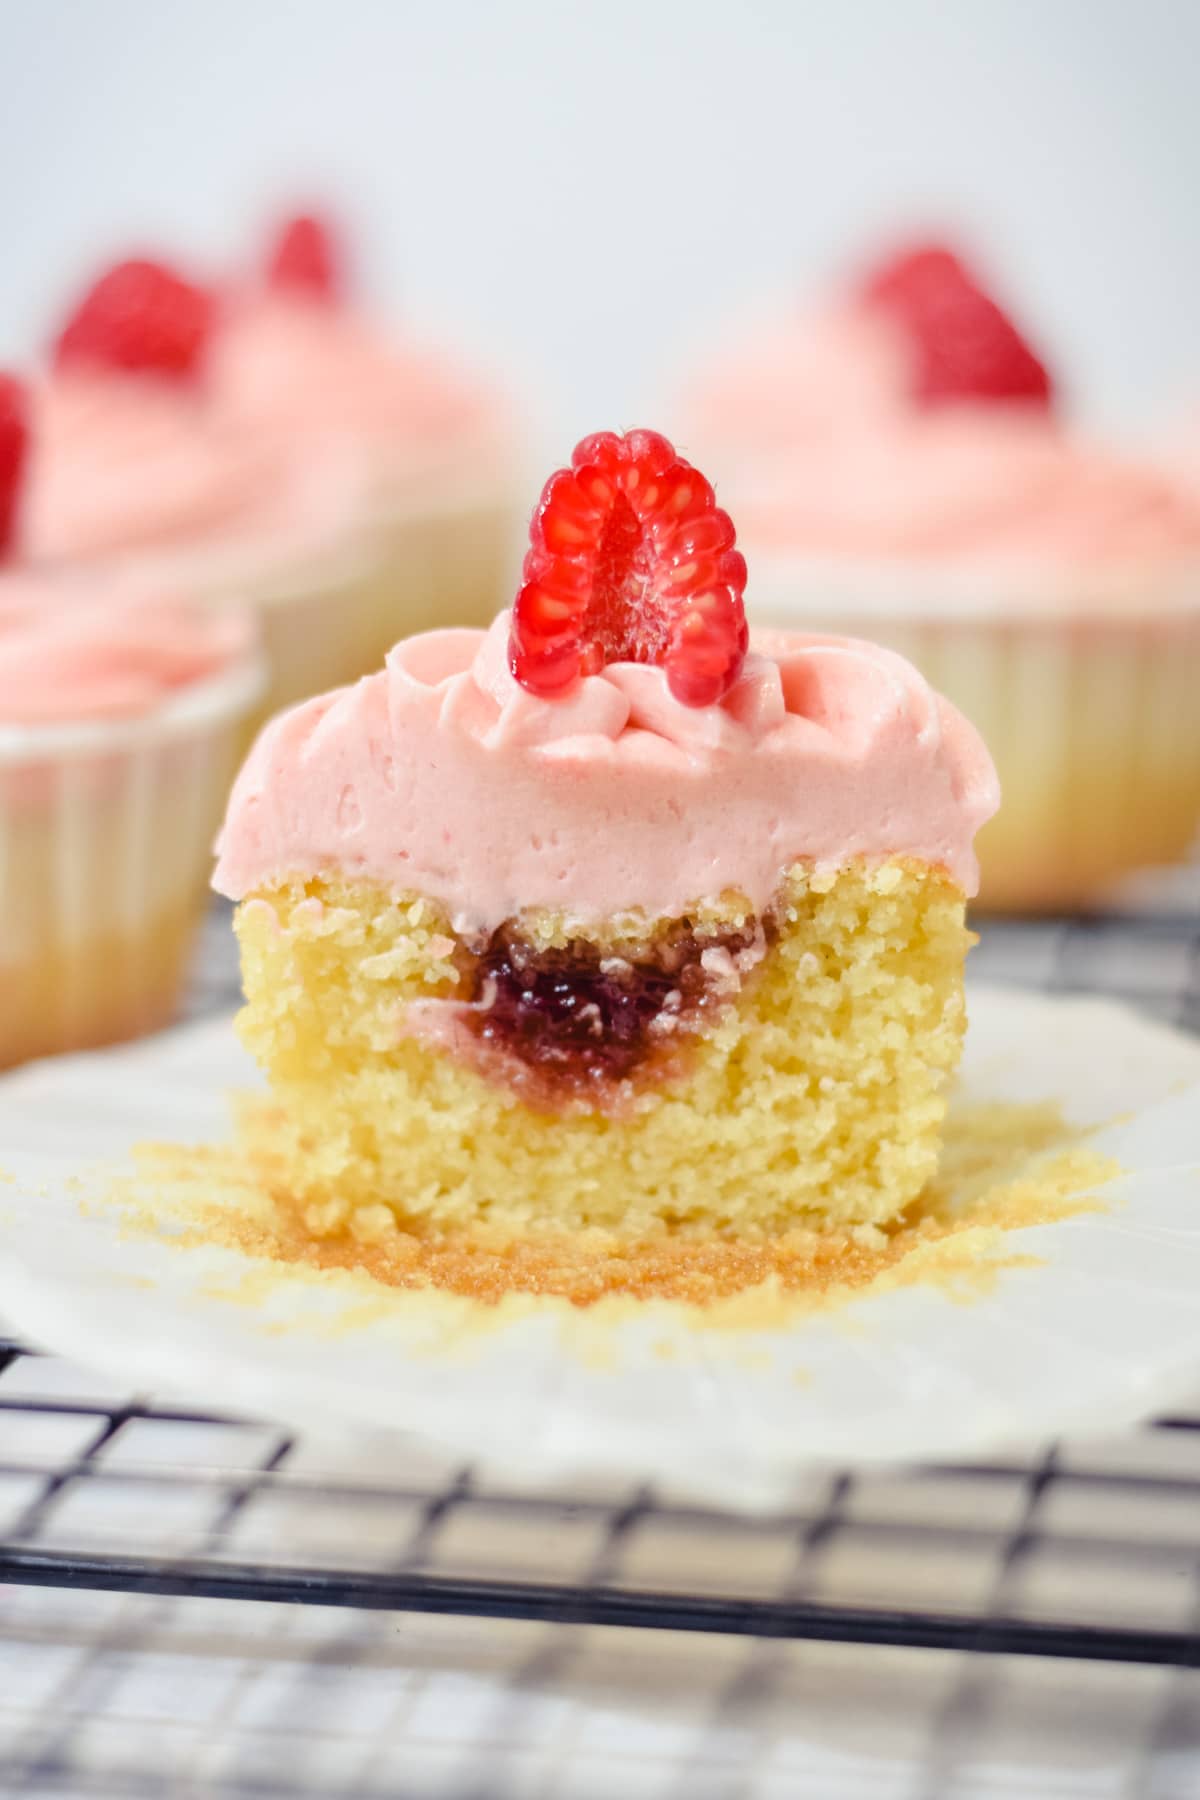 Raspberry cupcake cut in half to show optional raspberry preserves filling